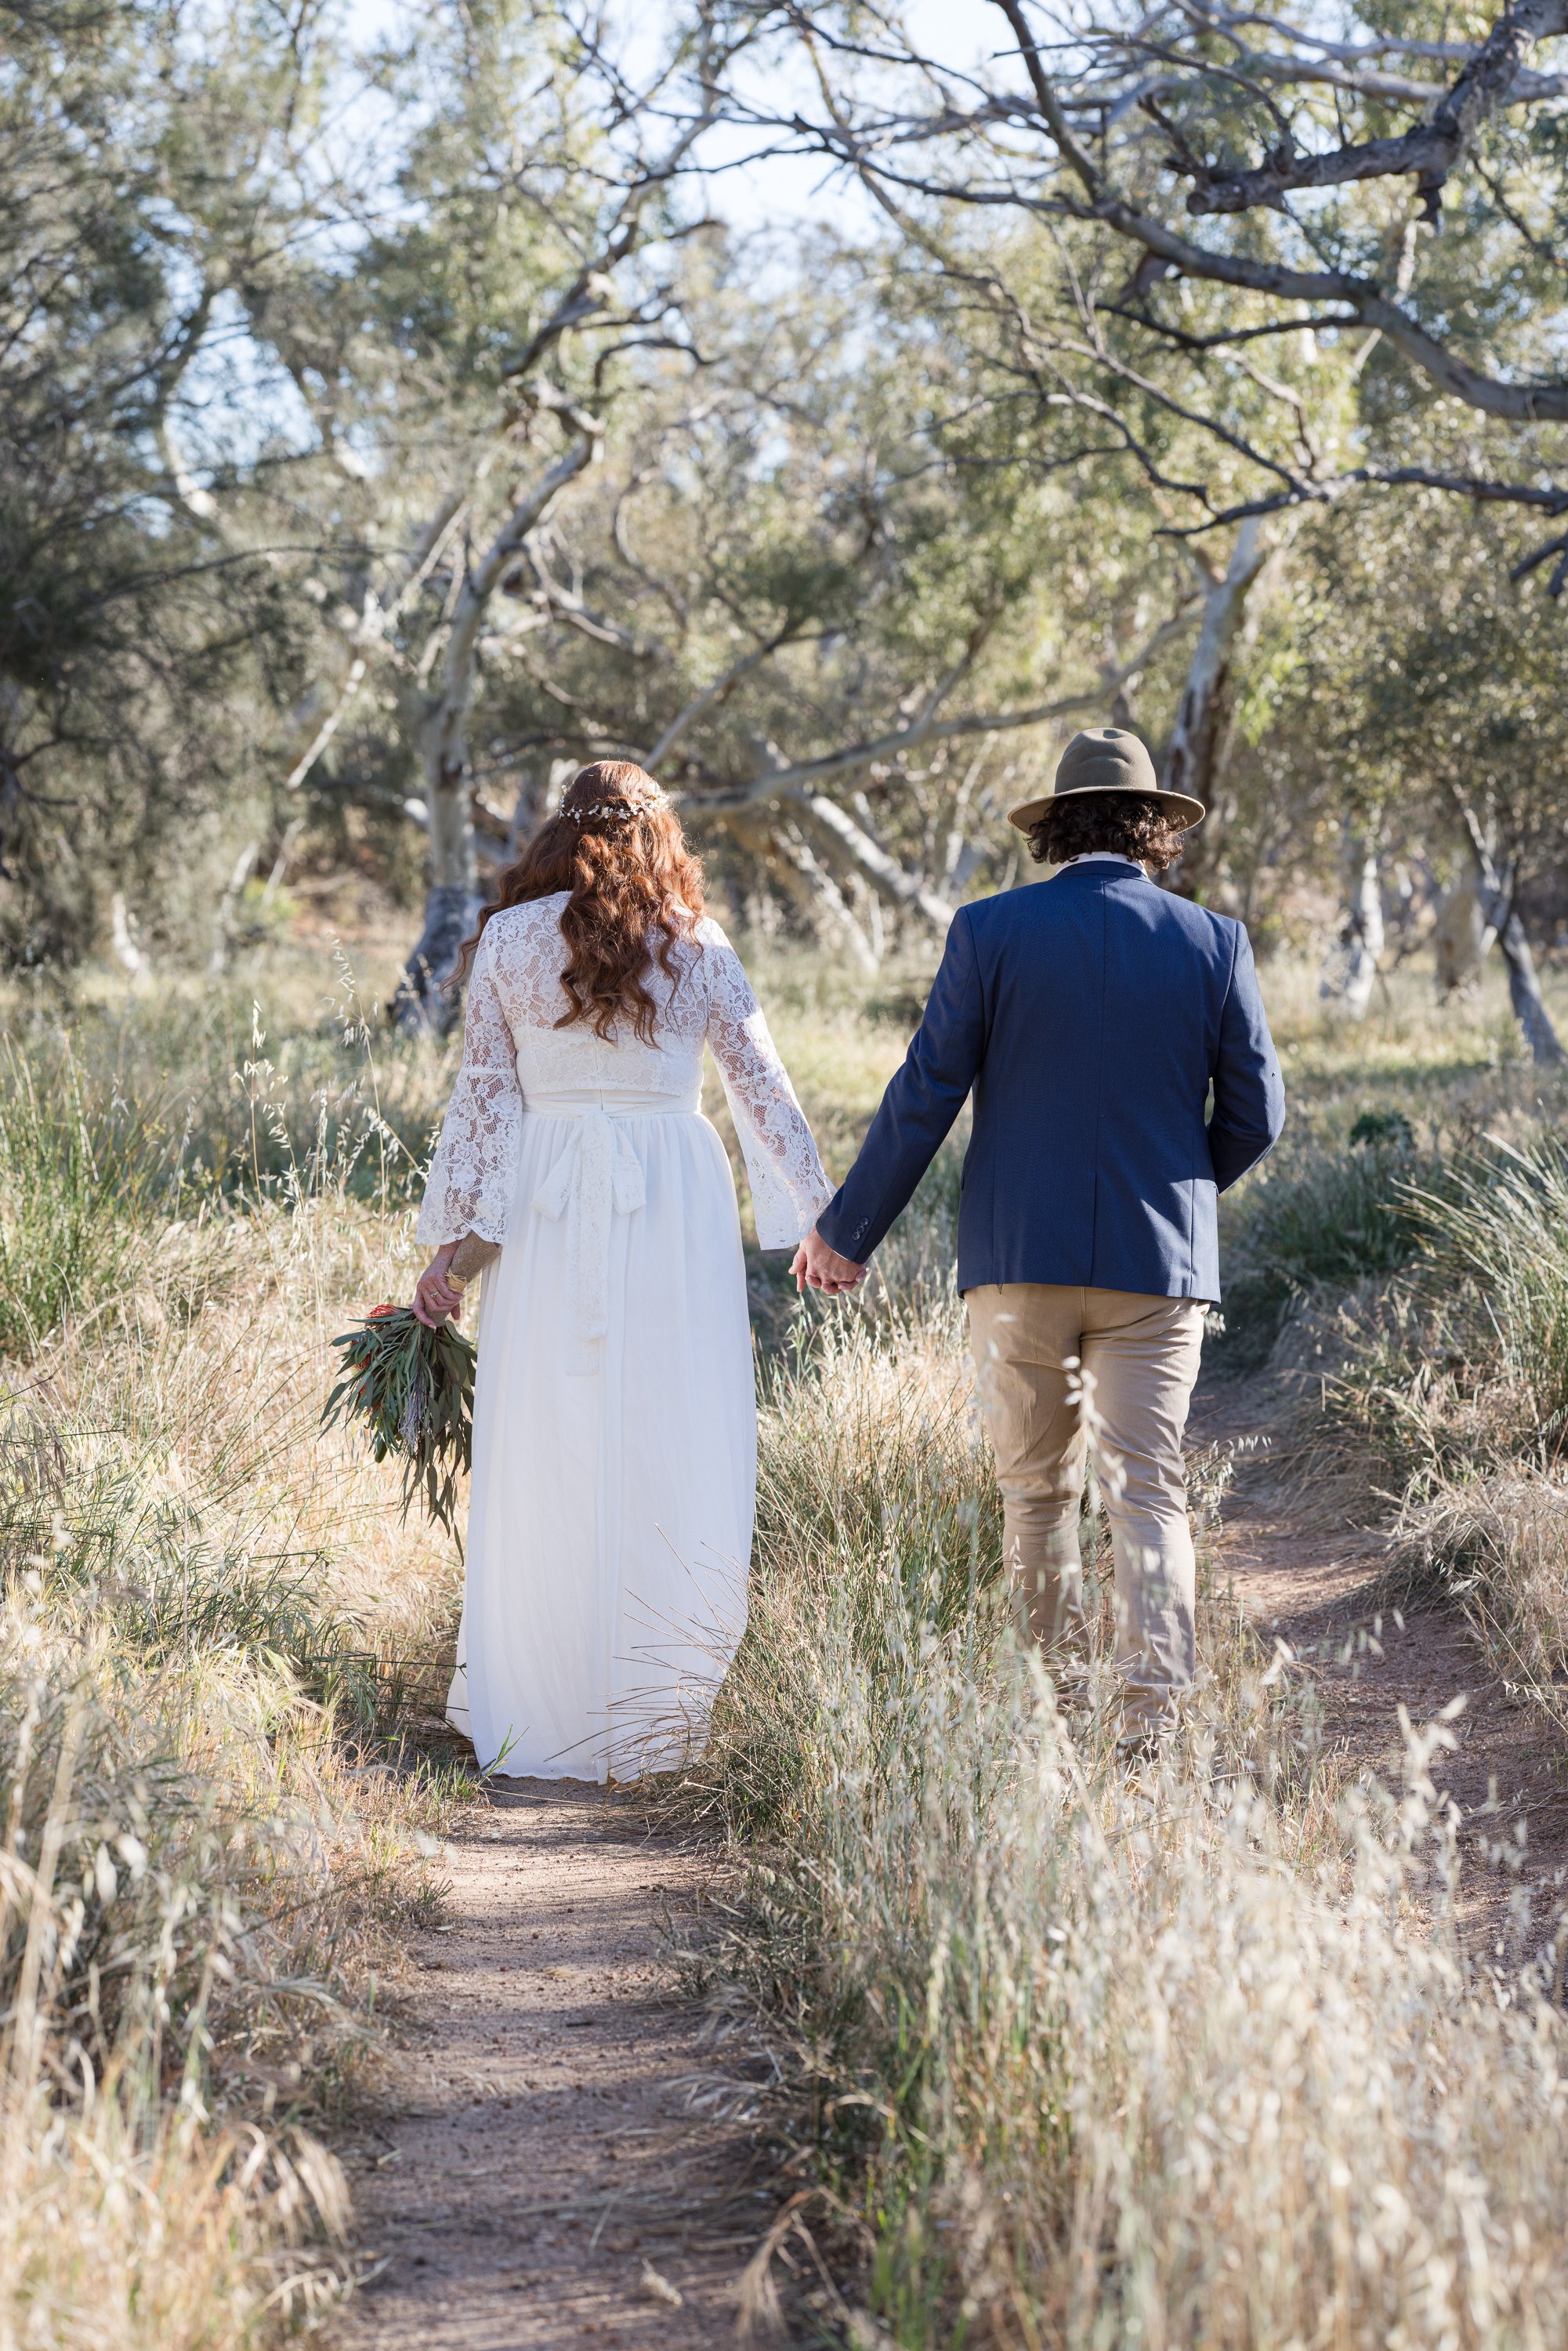 Wedding photographer Geraldton - country wedding - Michelle McKoy Photography (5).jpg